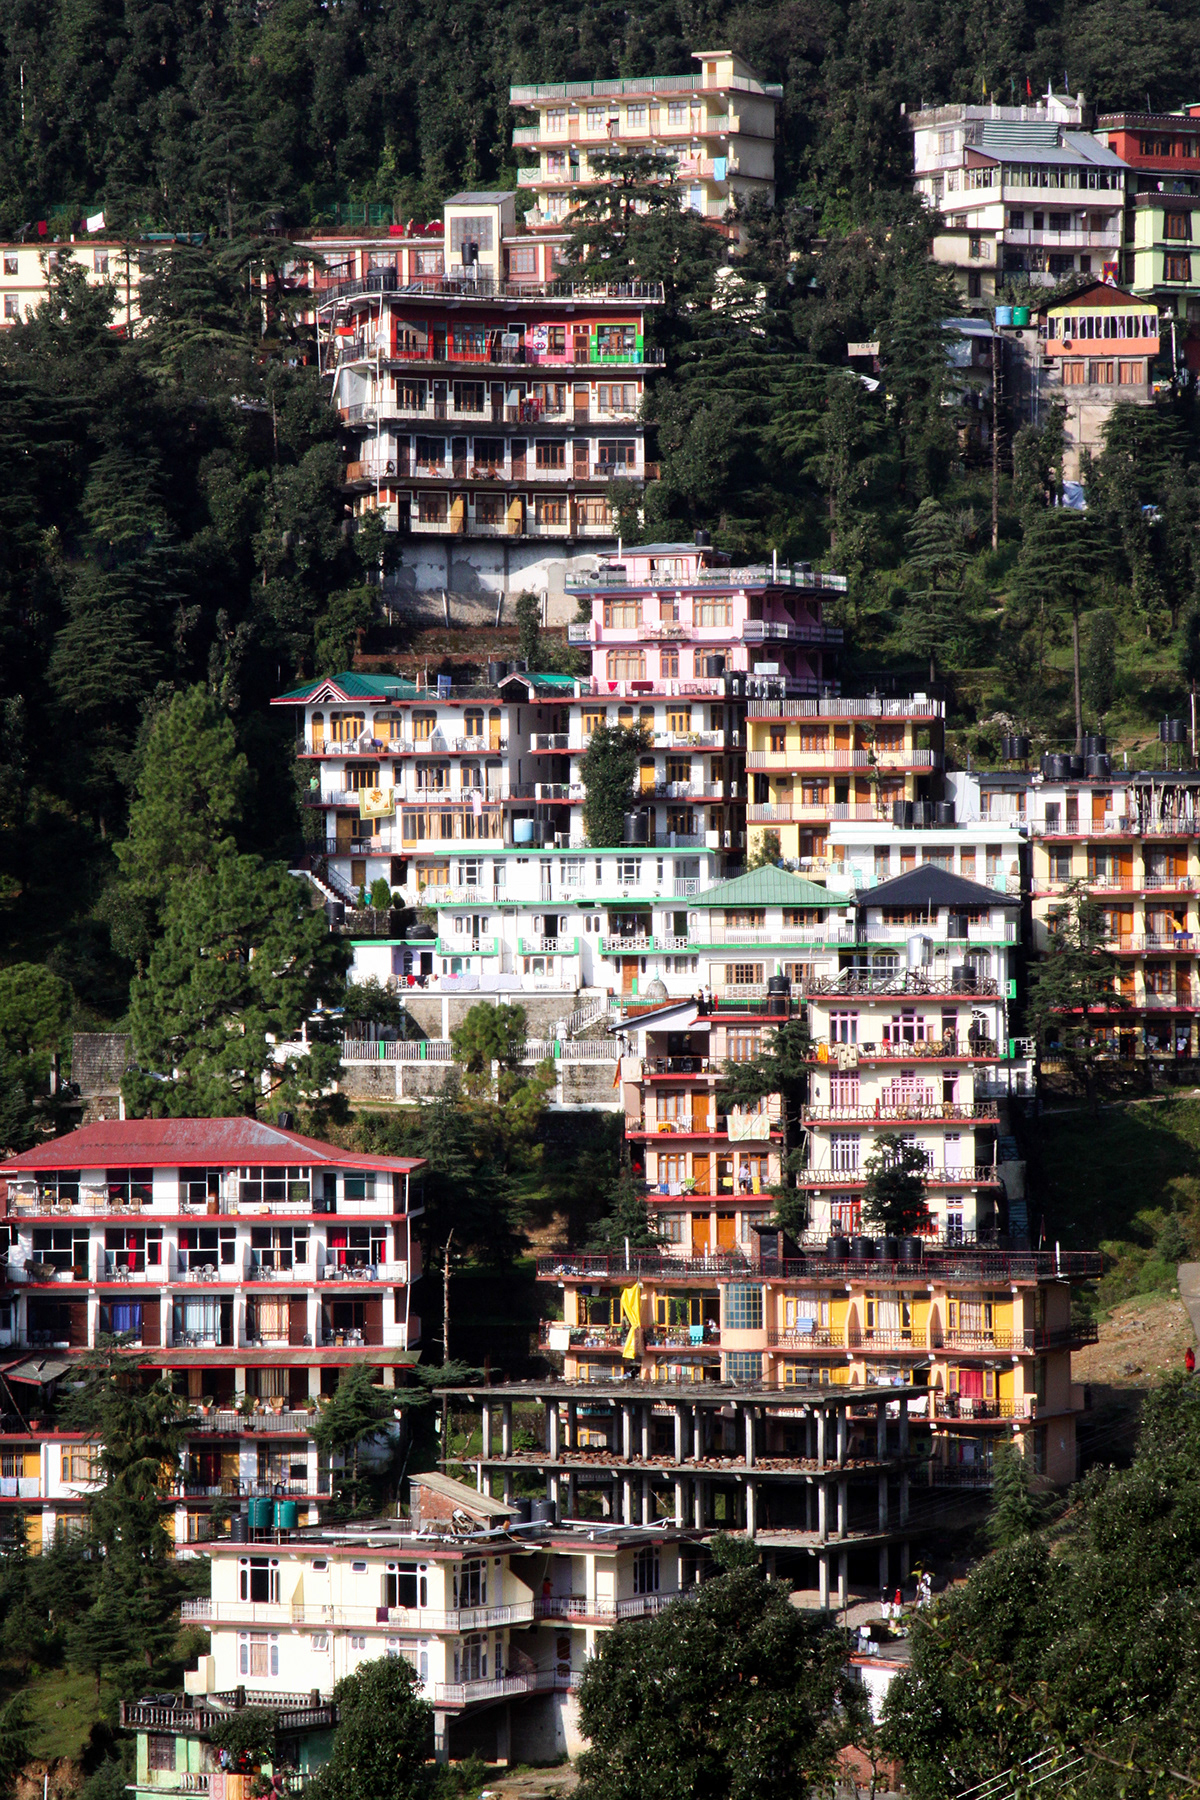 dharamsala photos  Dharamsala mcleod ganj photos  himalayan photos  himalayan pics HImachal Pradesh himachal pradesh photos